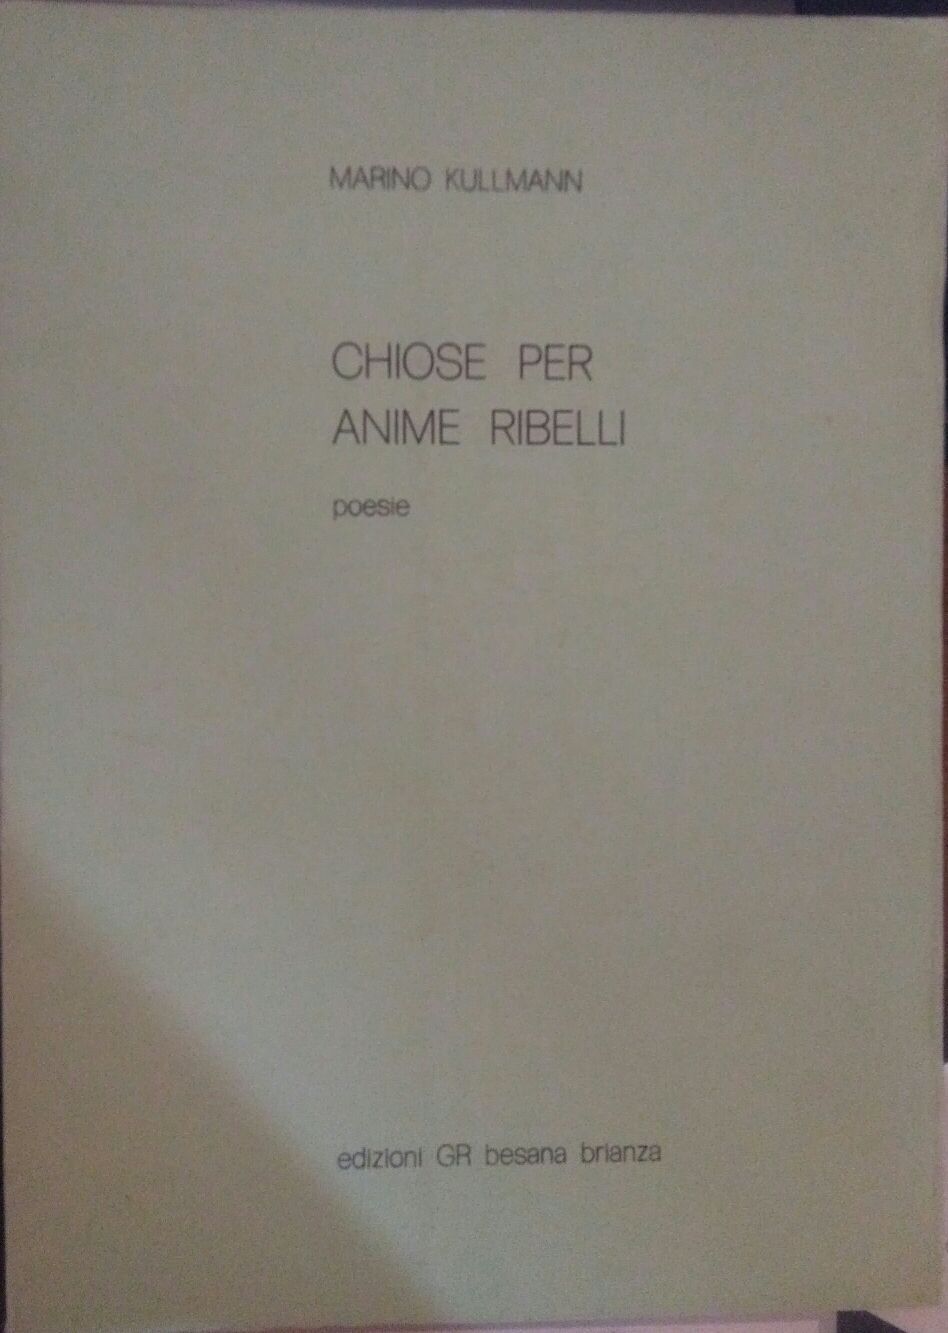 Chiose per anime ribelli Poesie-Marino Kullmann,1978,Edizioni GR - S